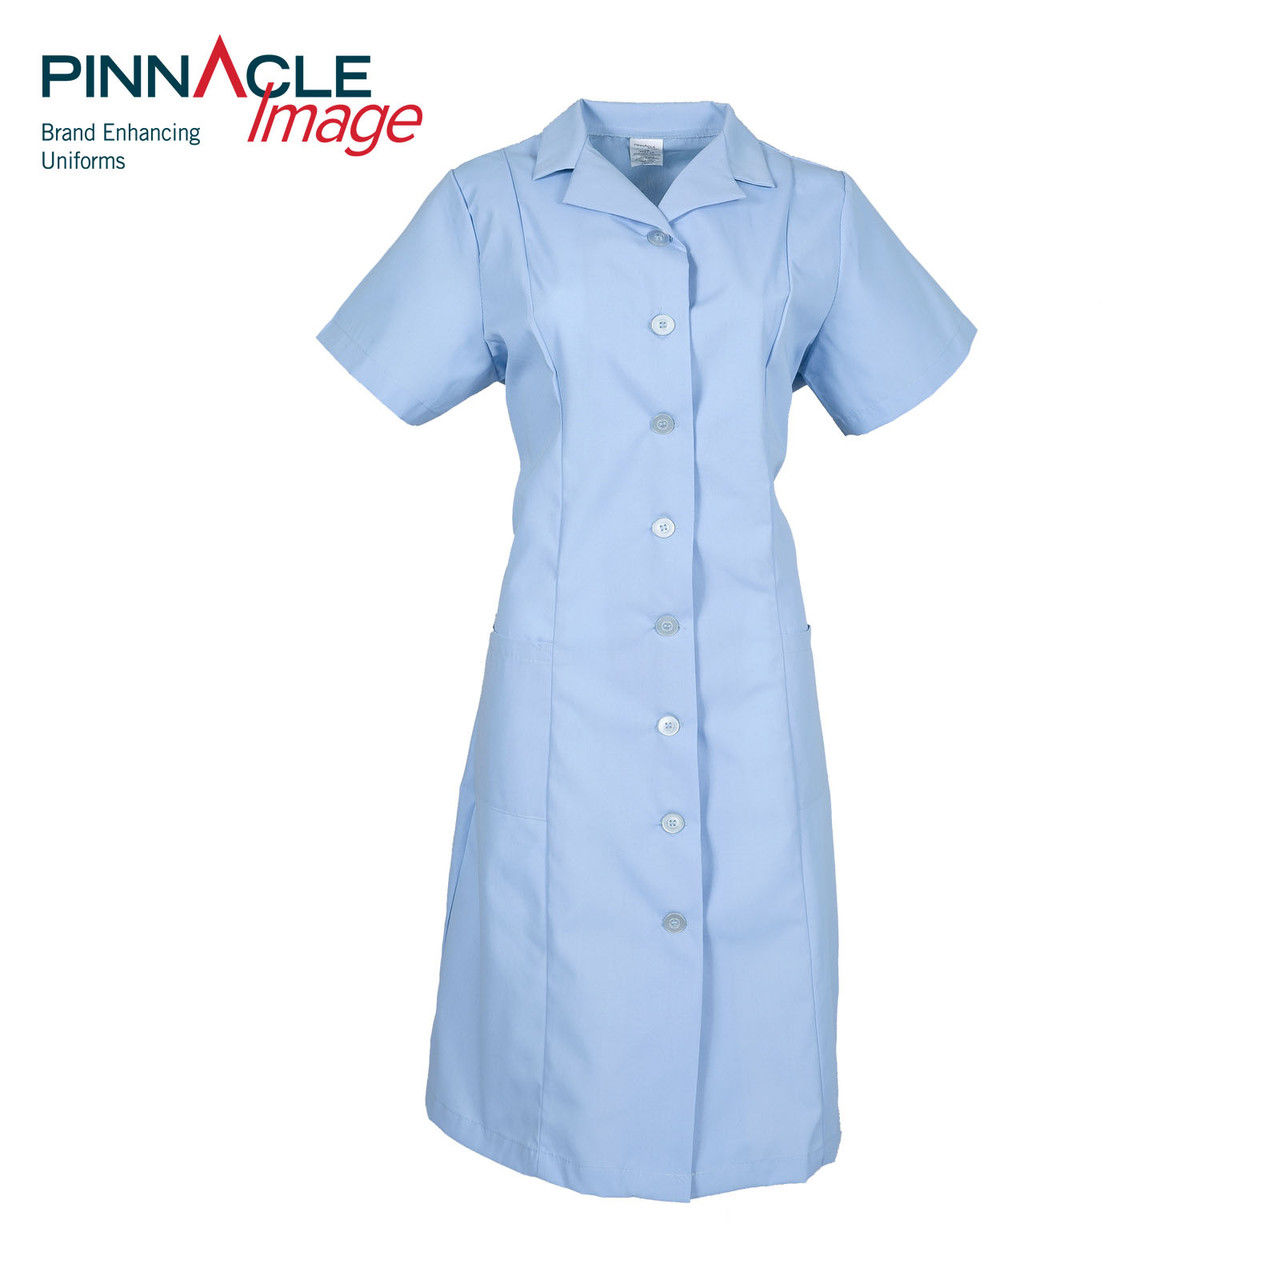 Does the blue uniform dress have a zip or button closure?